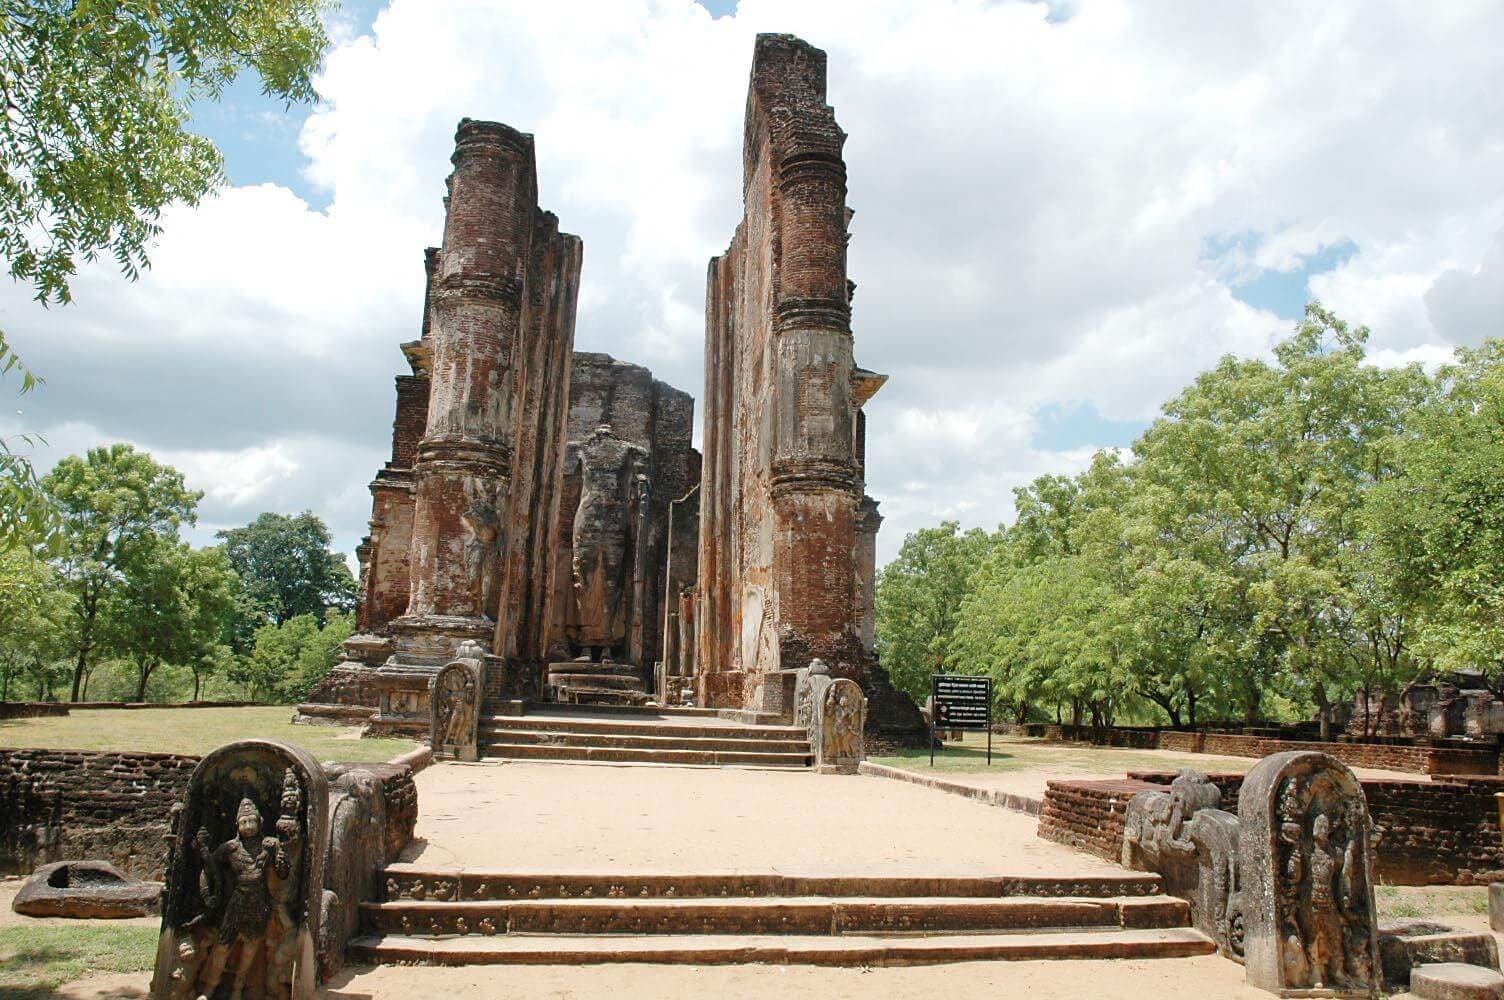 Una foto de Thiwanka Image House 'Thiwanka Pilima Geya' en el antiguo reino de Polonnaruwa Sri Lanka